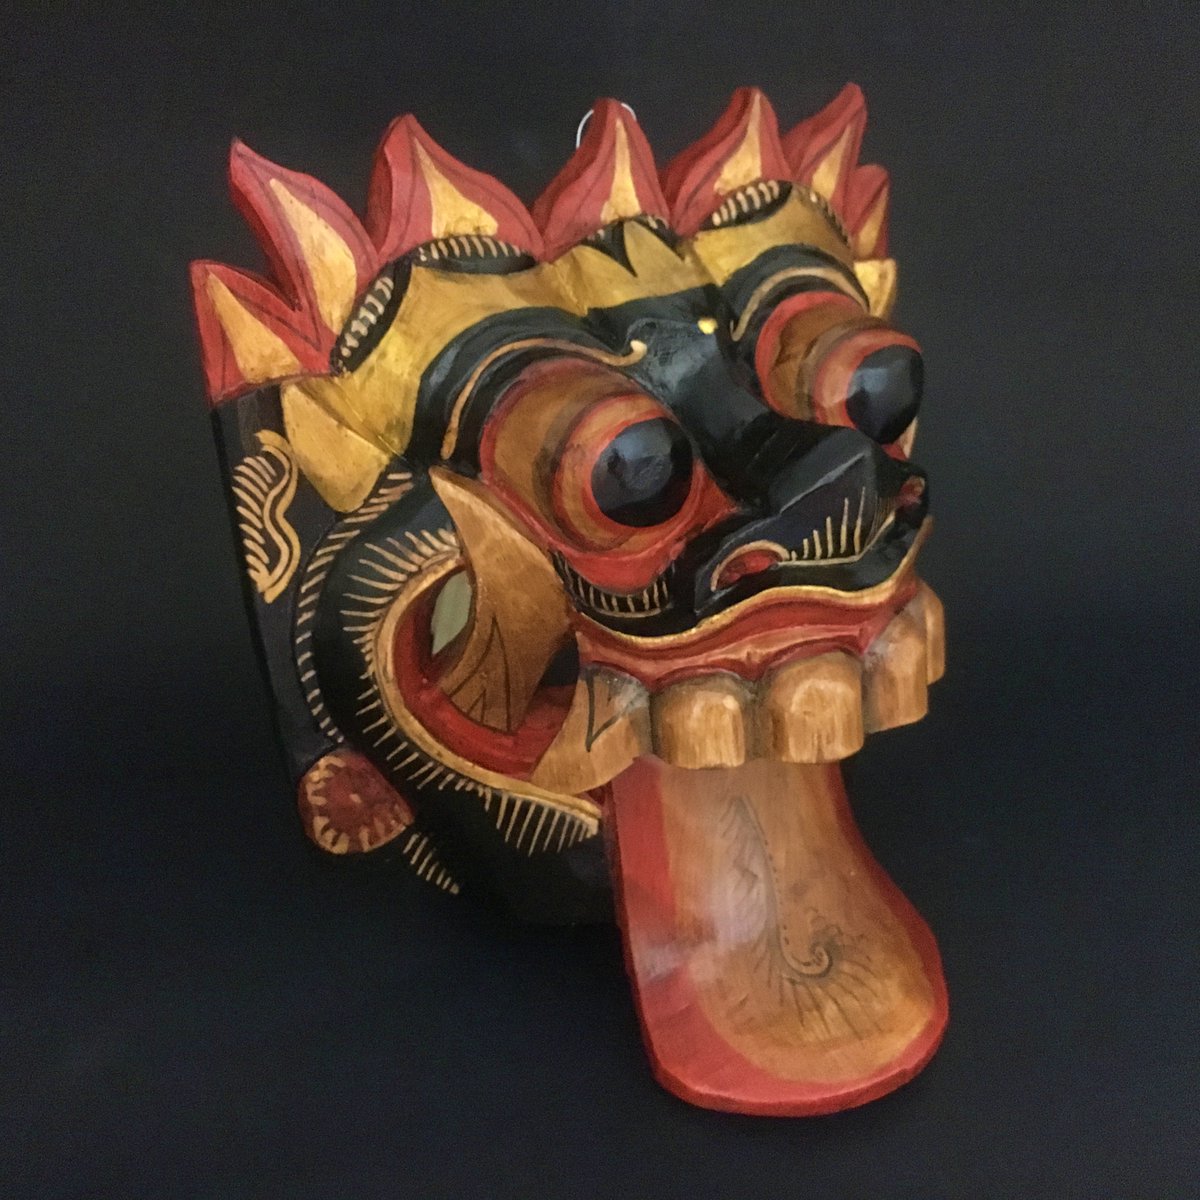 Check out Indonesia Bali Black Rangda Wooden Mask Hand Carved Wall Decor Hanging 8.5 in ebay.com/itm/2756752096… #eBay via @eBay